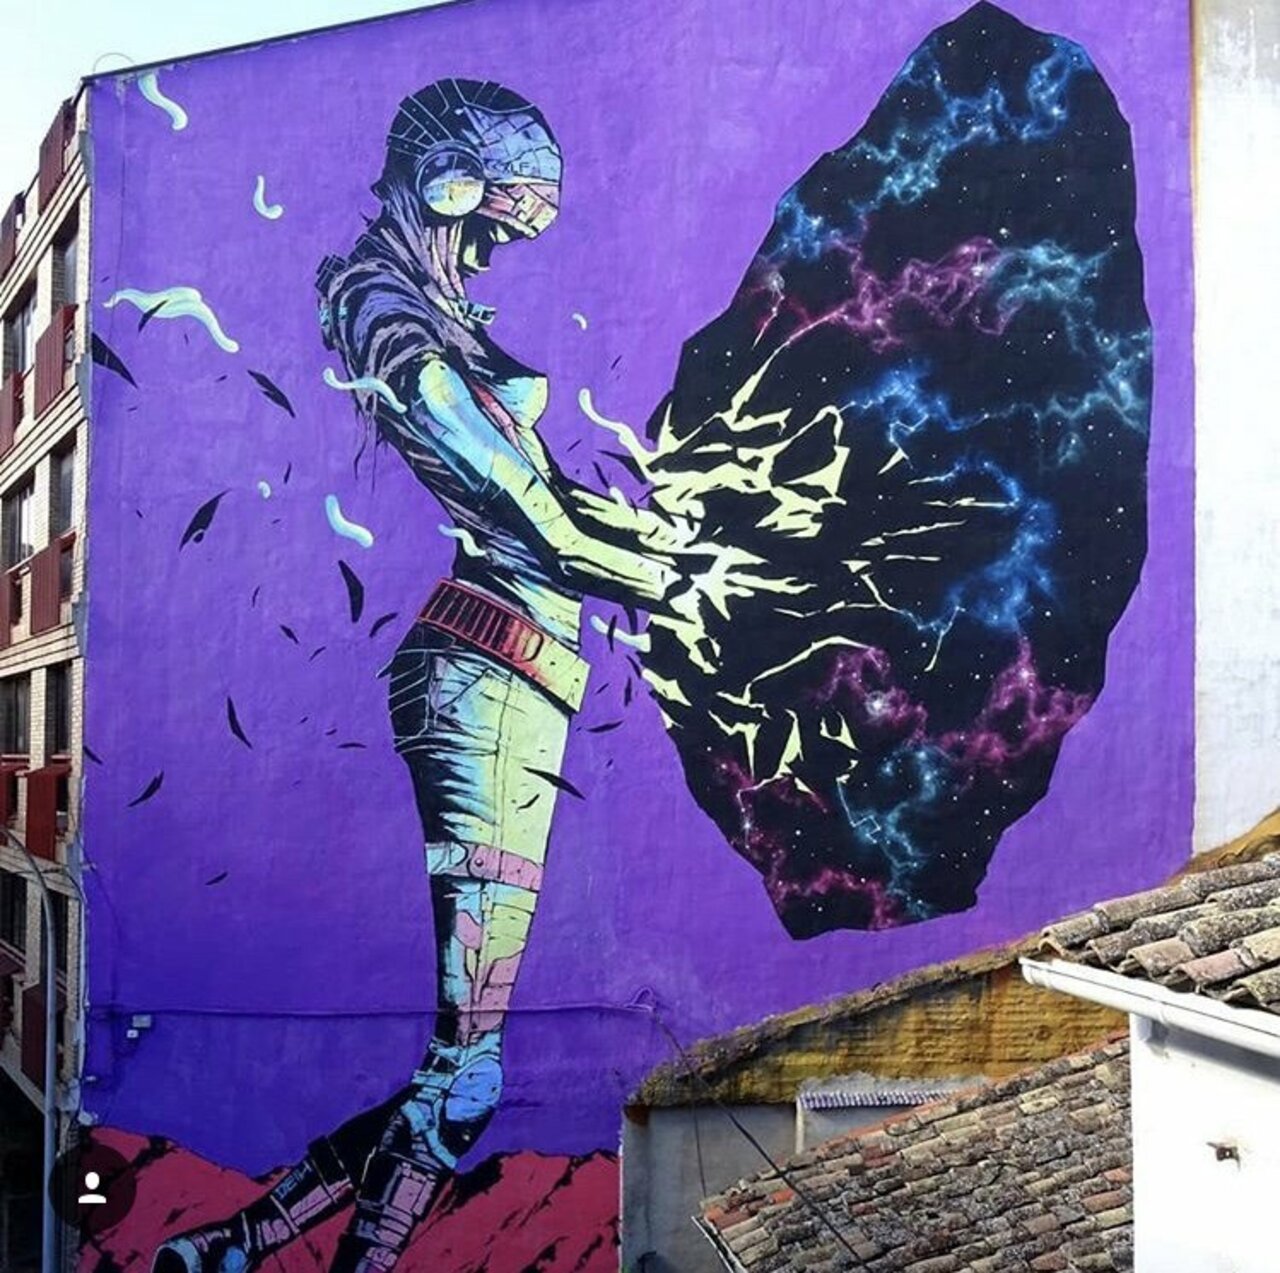 “A New Beginning” By El Deih #streetart #mural #graffiti #art https://t.co/lceOHpqHl4